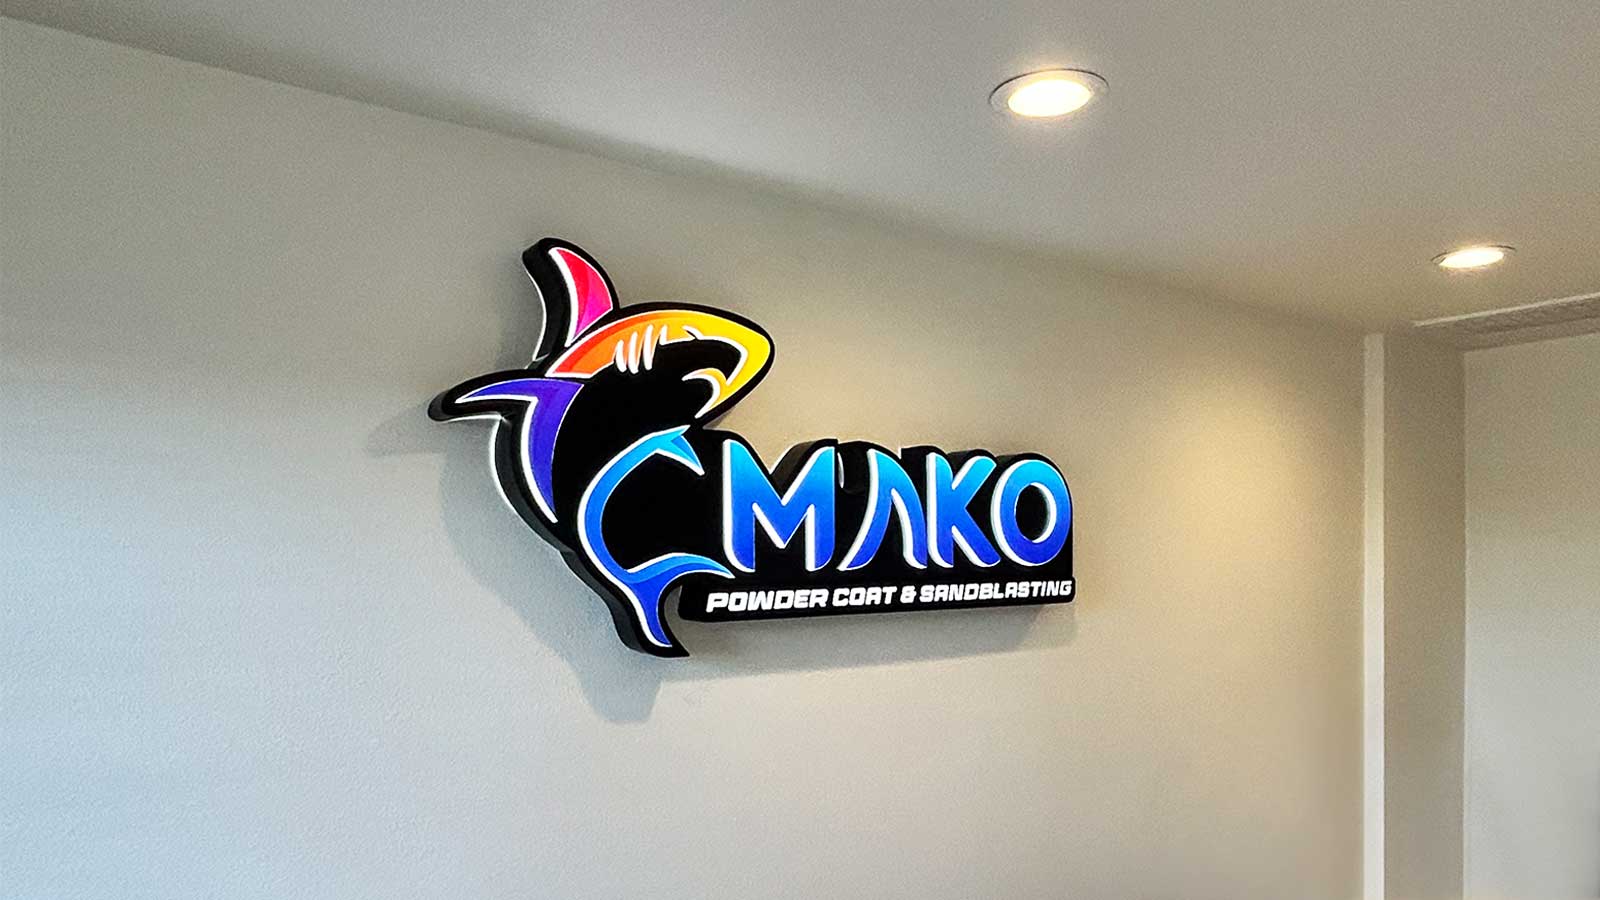 mako powder coat and sandblasting logo sign on the wall